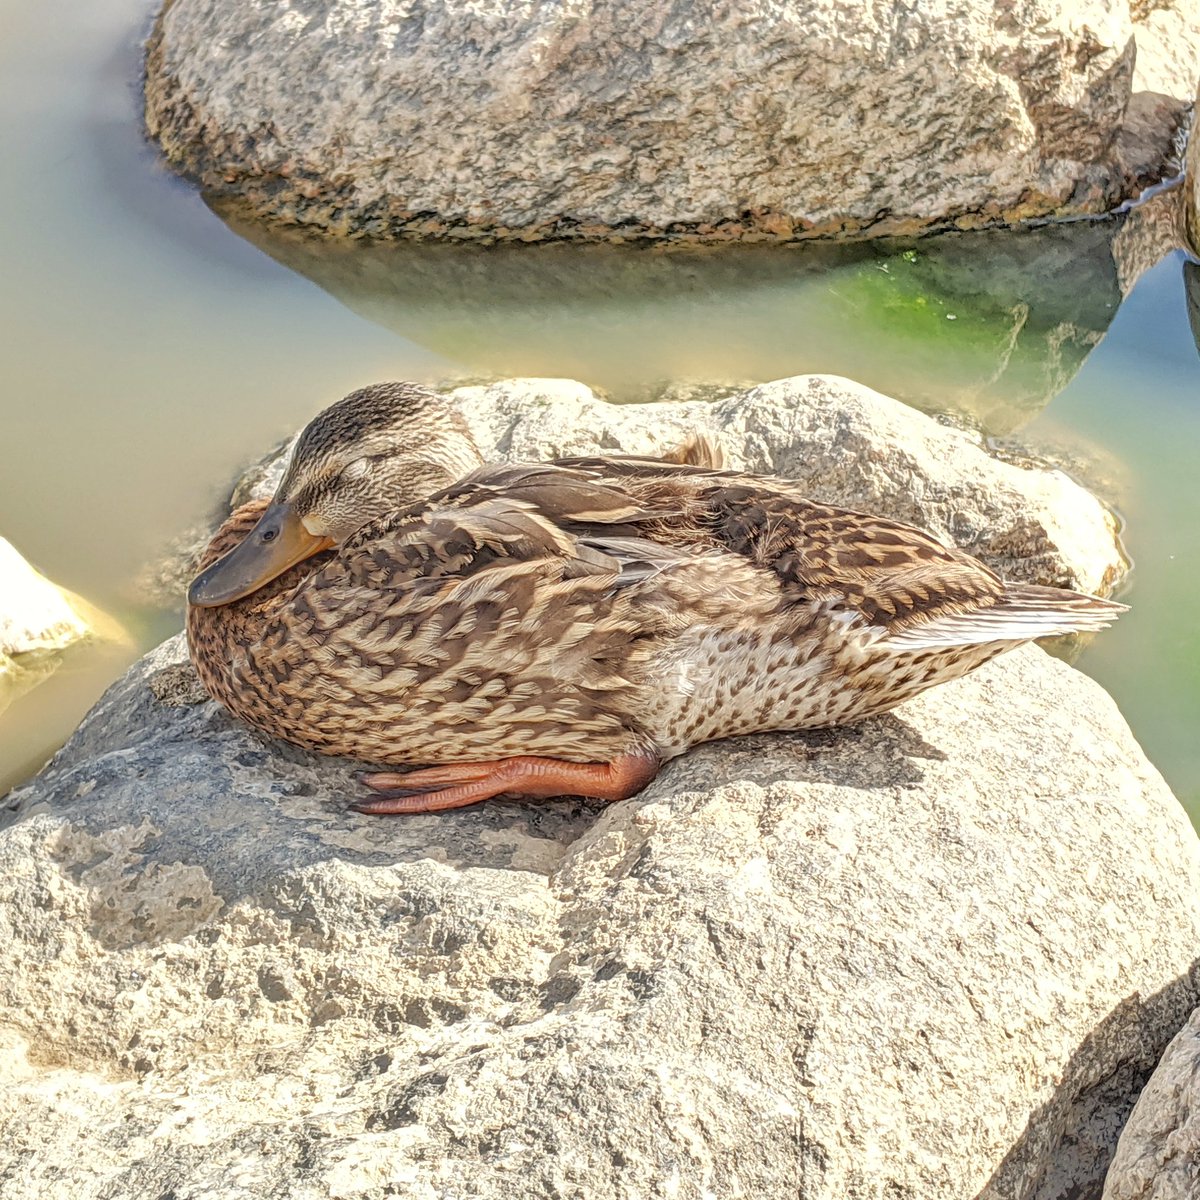  July 20 Duckling siesta time 